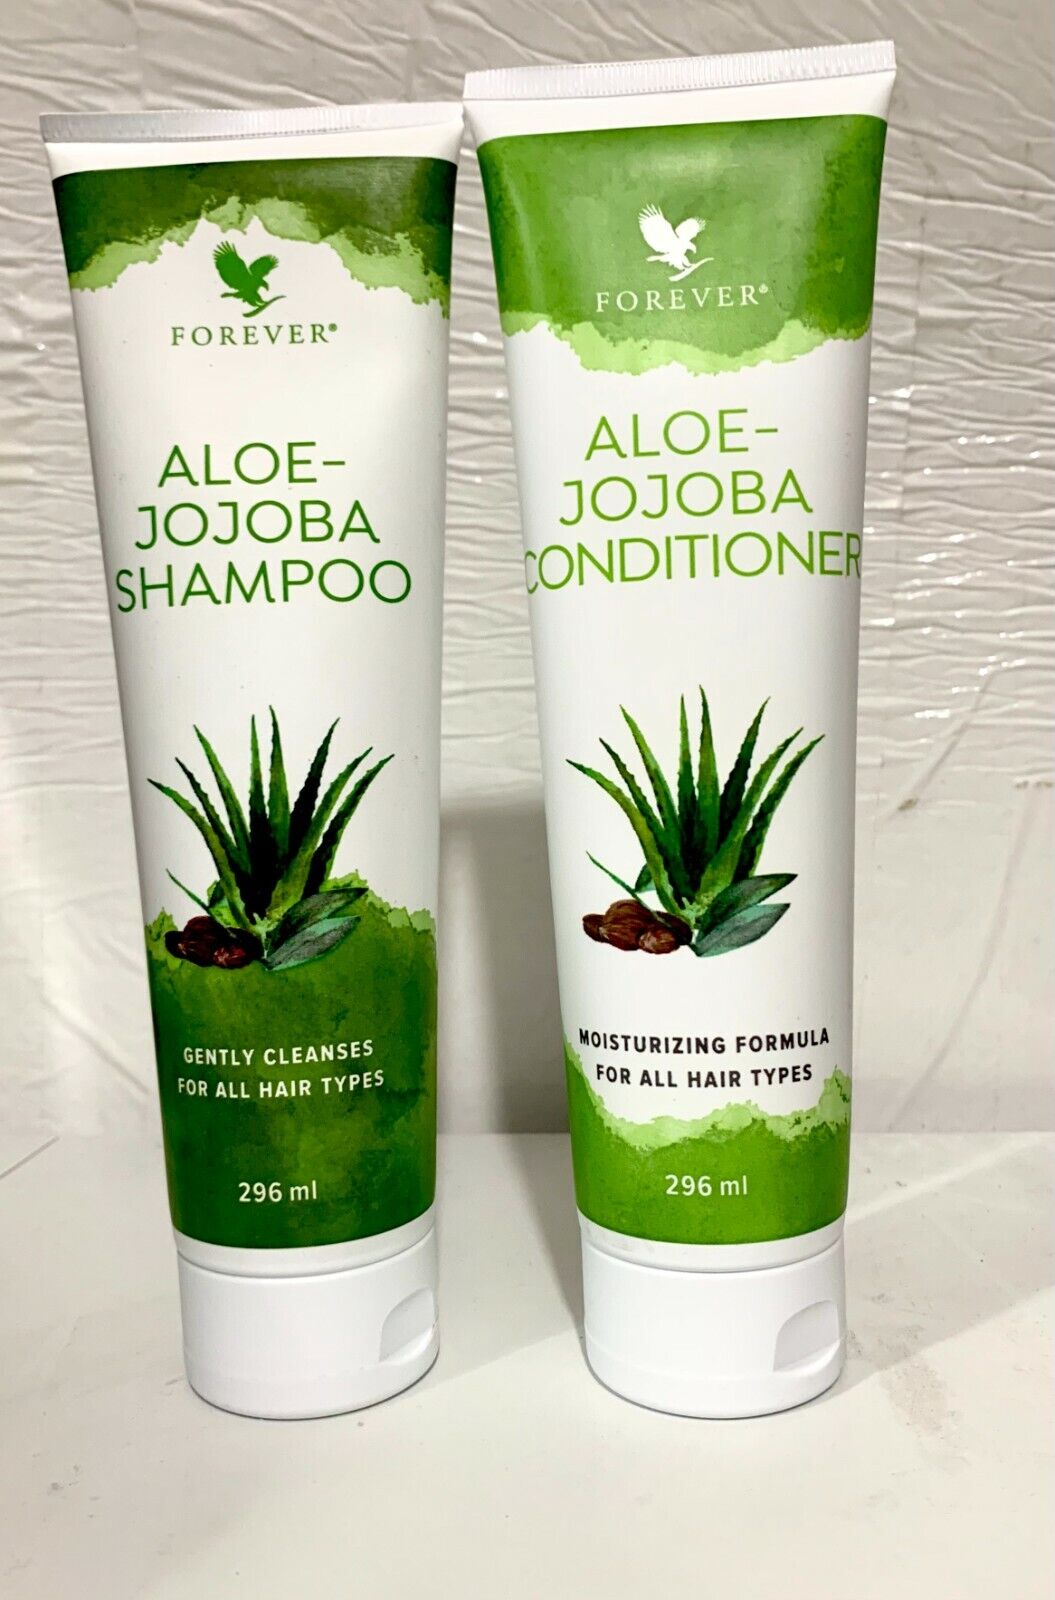 aloe jojoba szampon forever